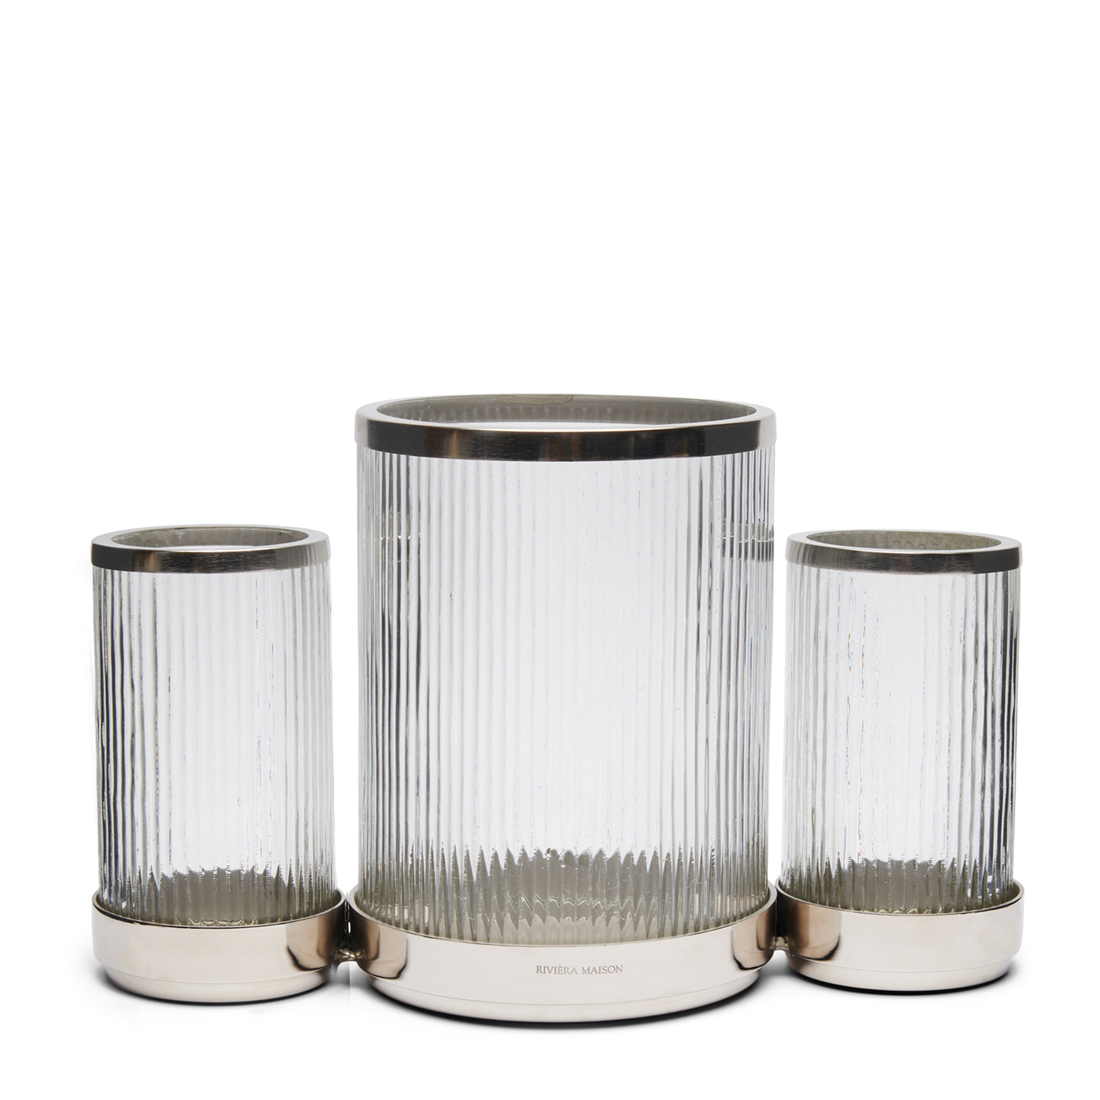 Riviera Maison Windlicht glas, Kandelaar voor decoratie en stompkaarsen - RM Panthonia Multiple Hurricane - Goud - Aluminium, Glas